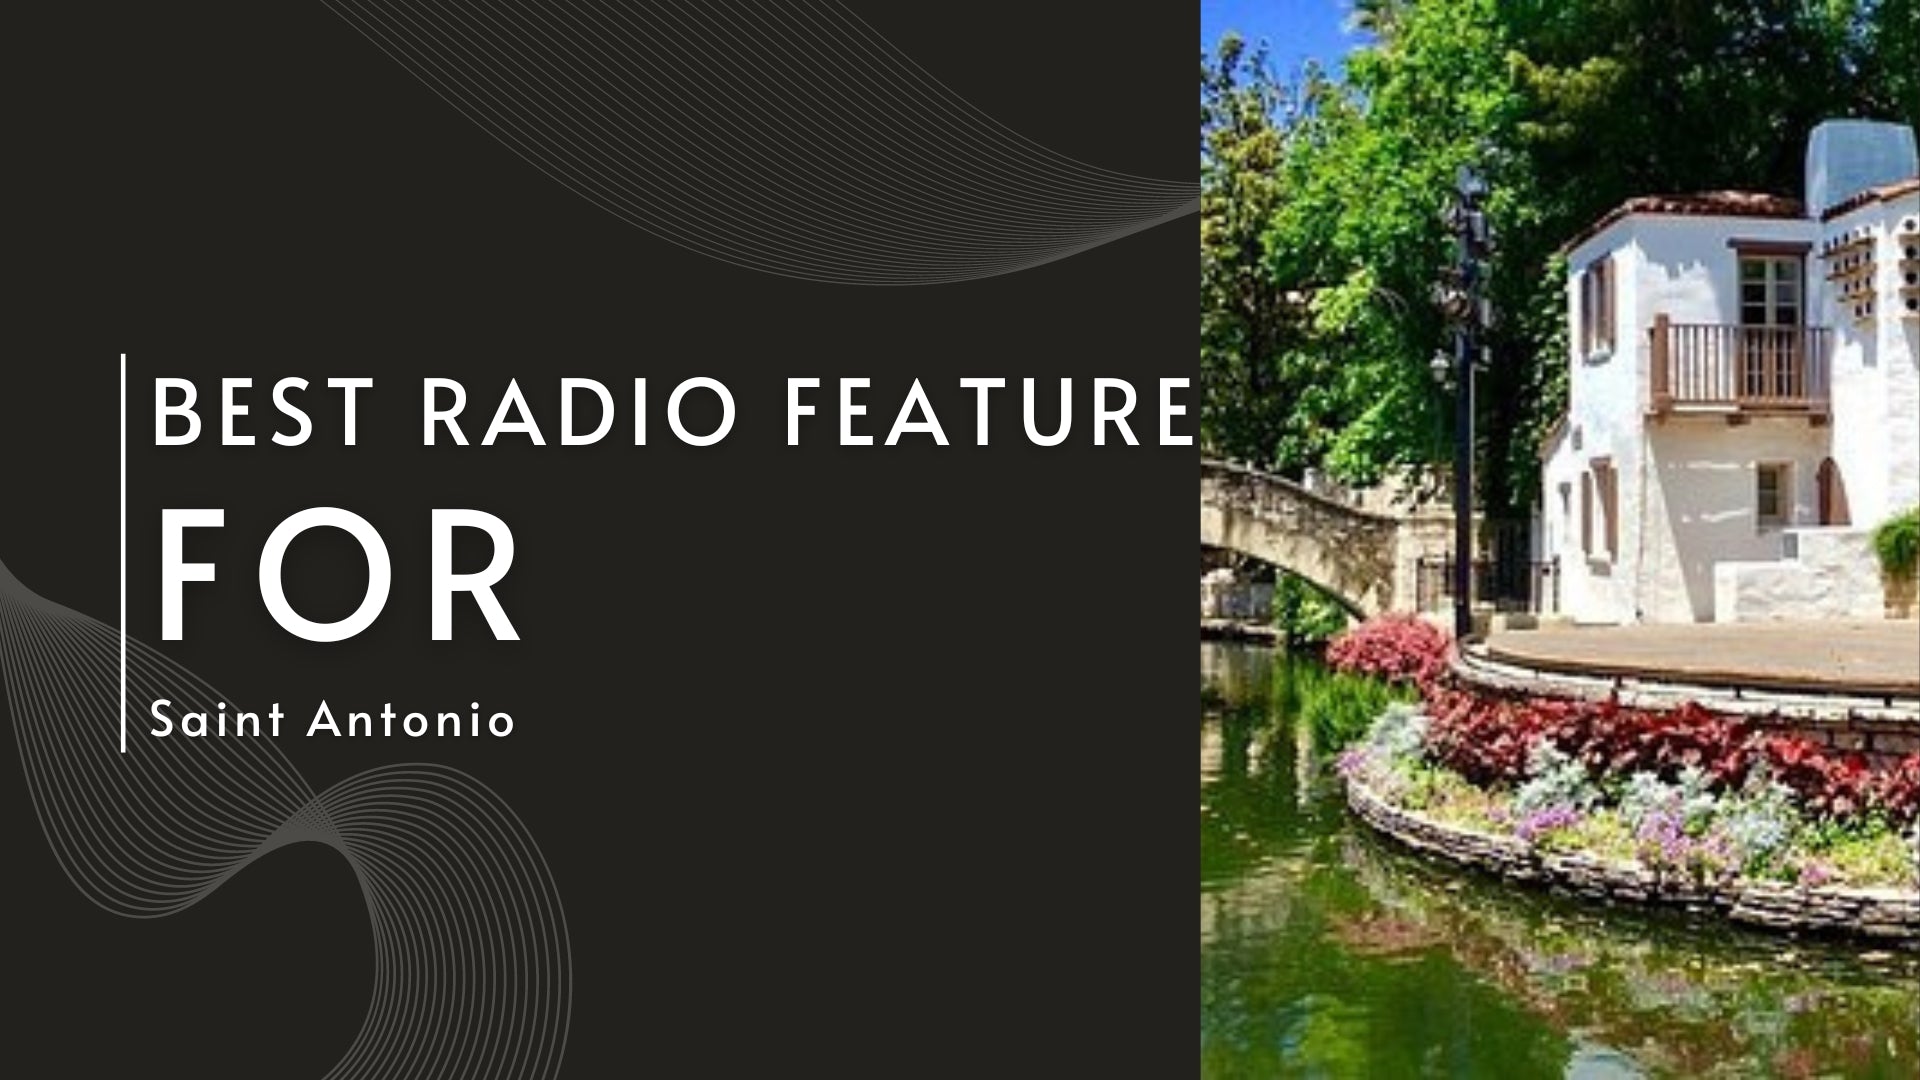 What's The Best Radio Feature In San Antonio?